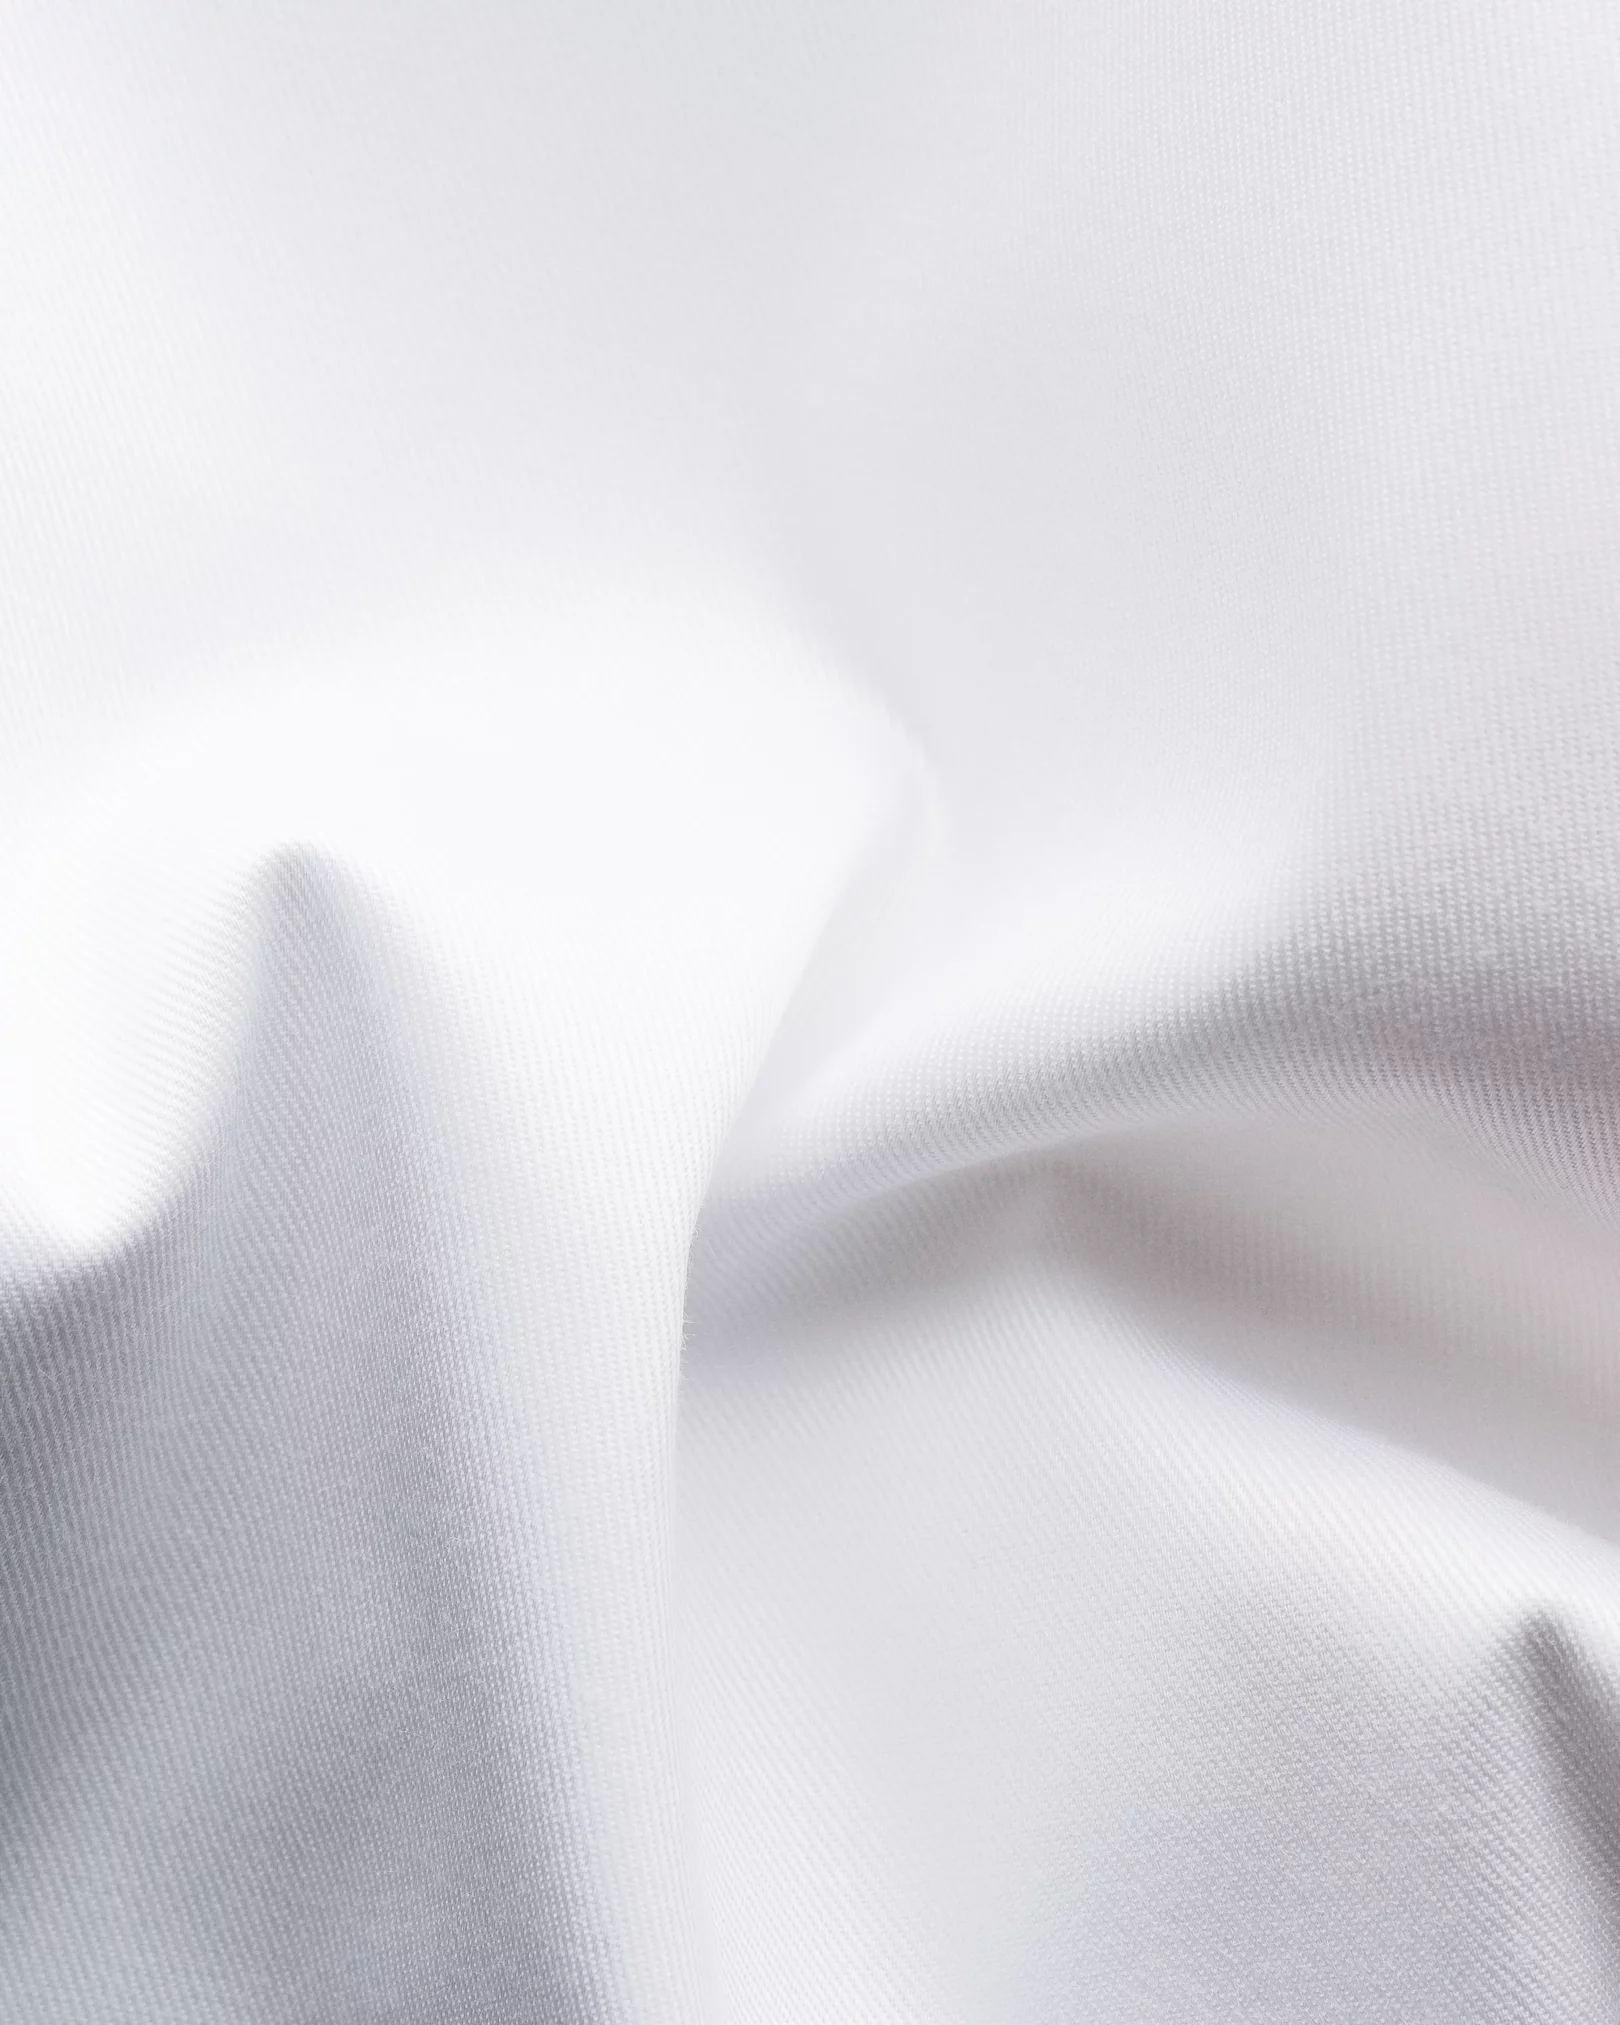 Eton - white fine twill shirt